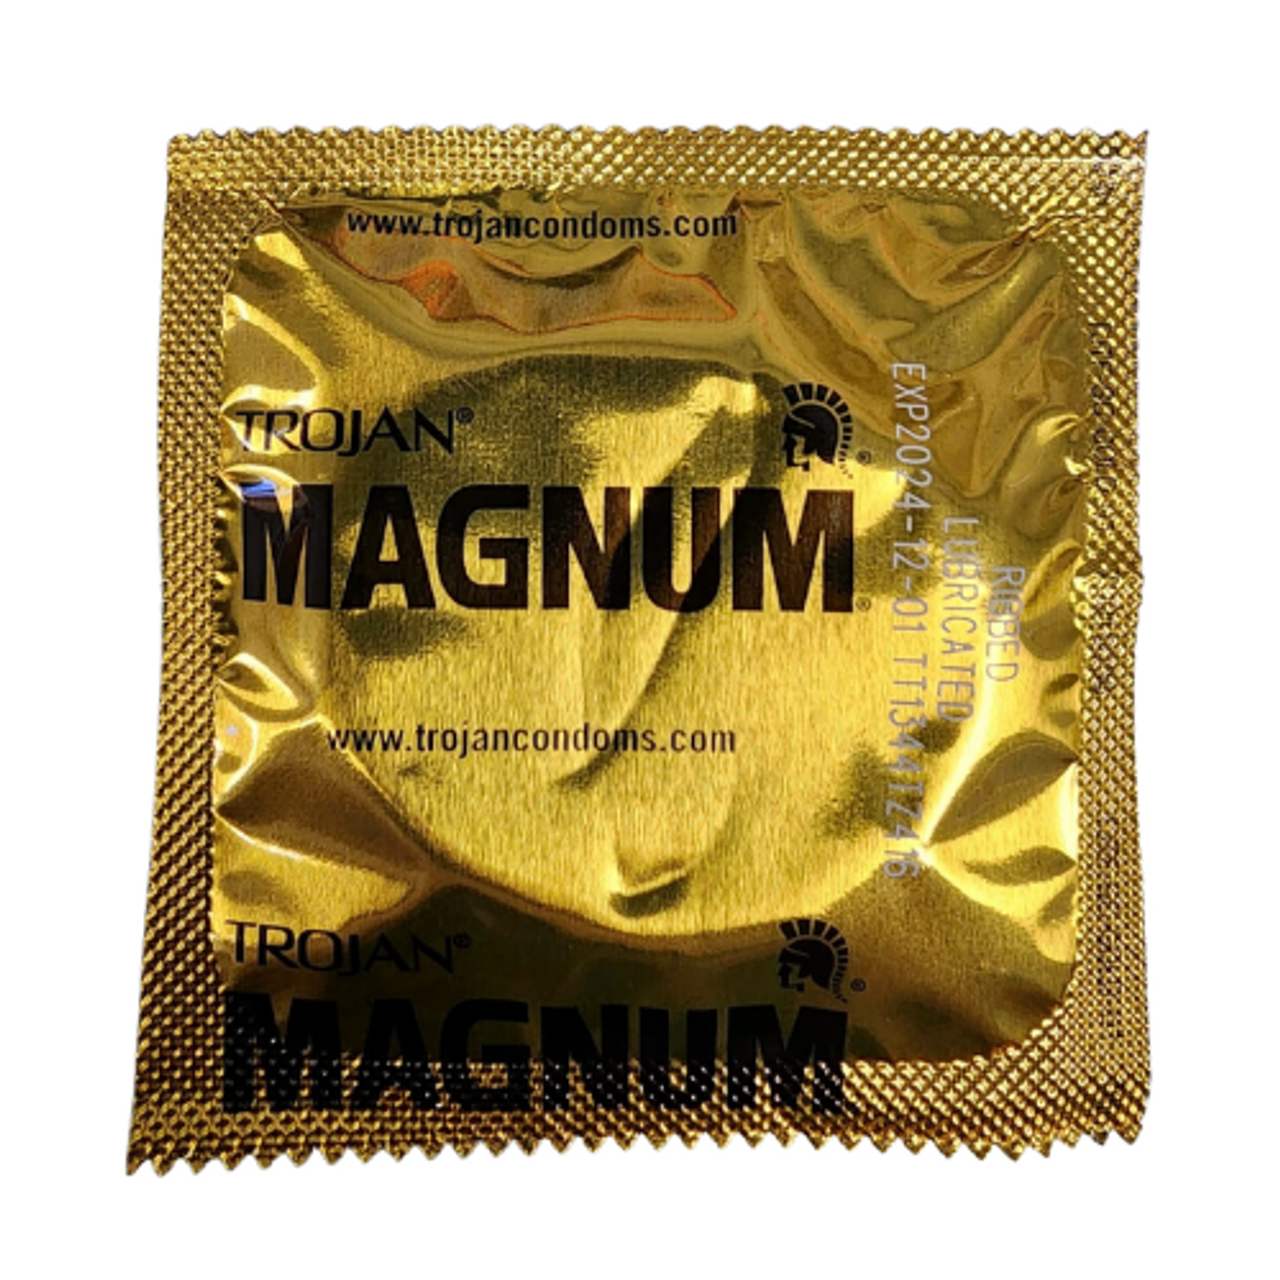 Trojan Magnum Ribbed | Buy Trojan Condoms online from CondomDepot.com